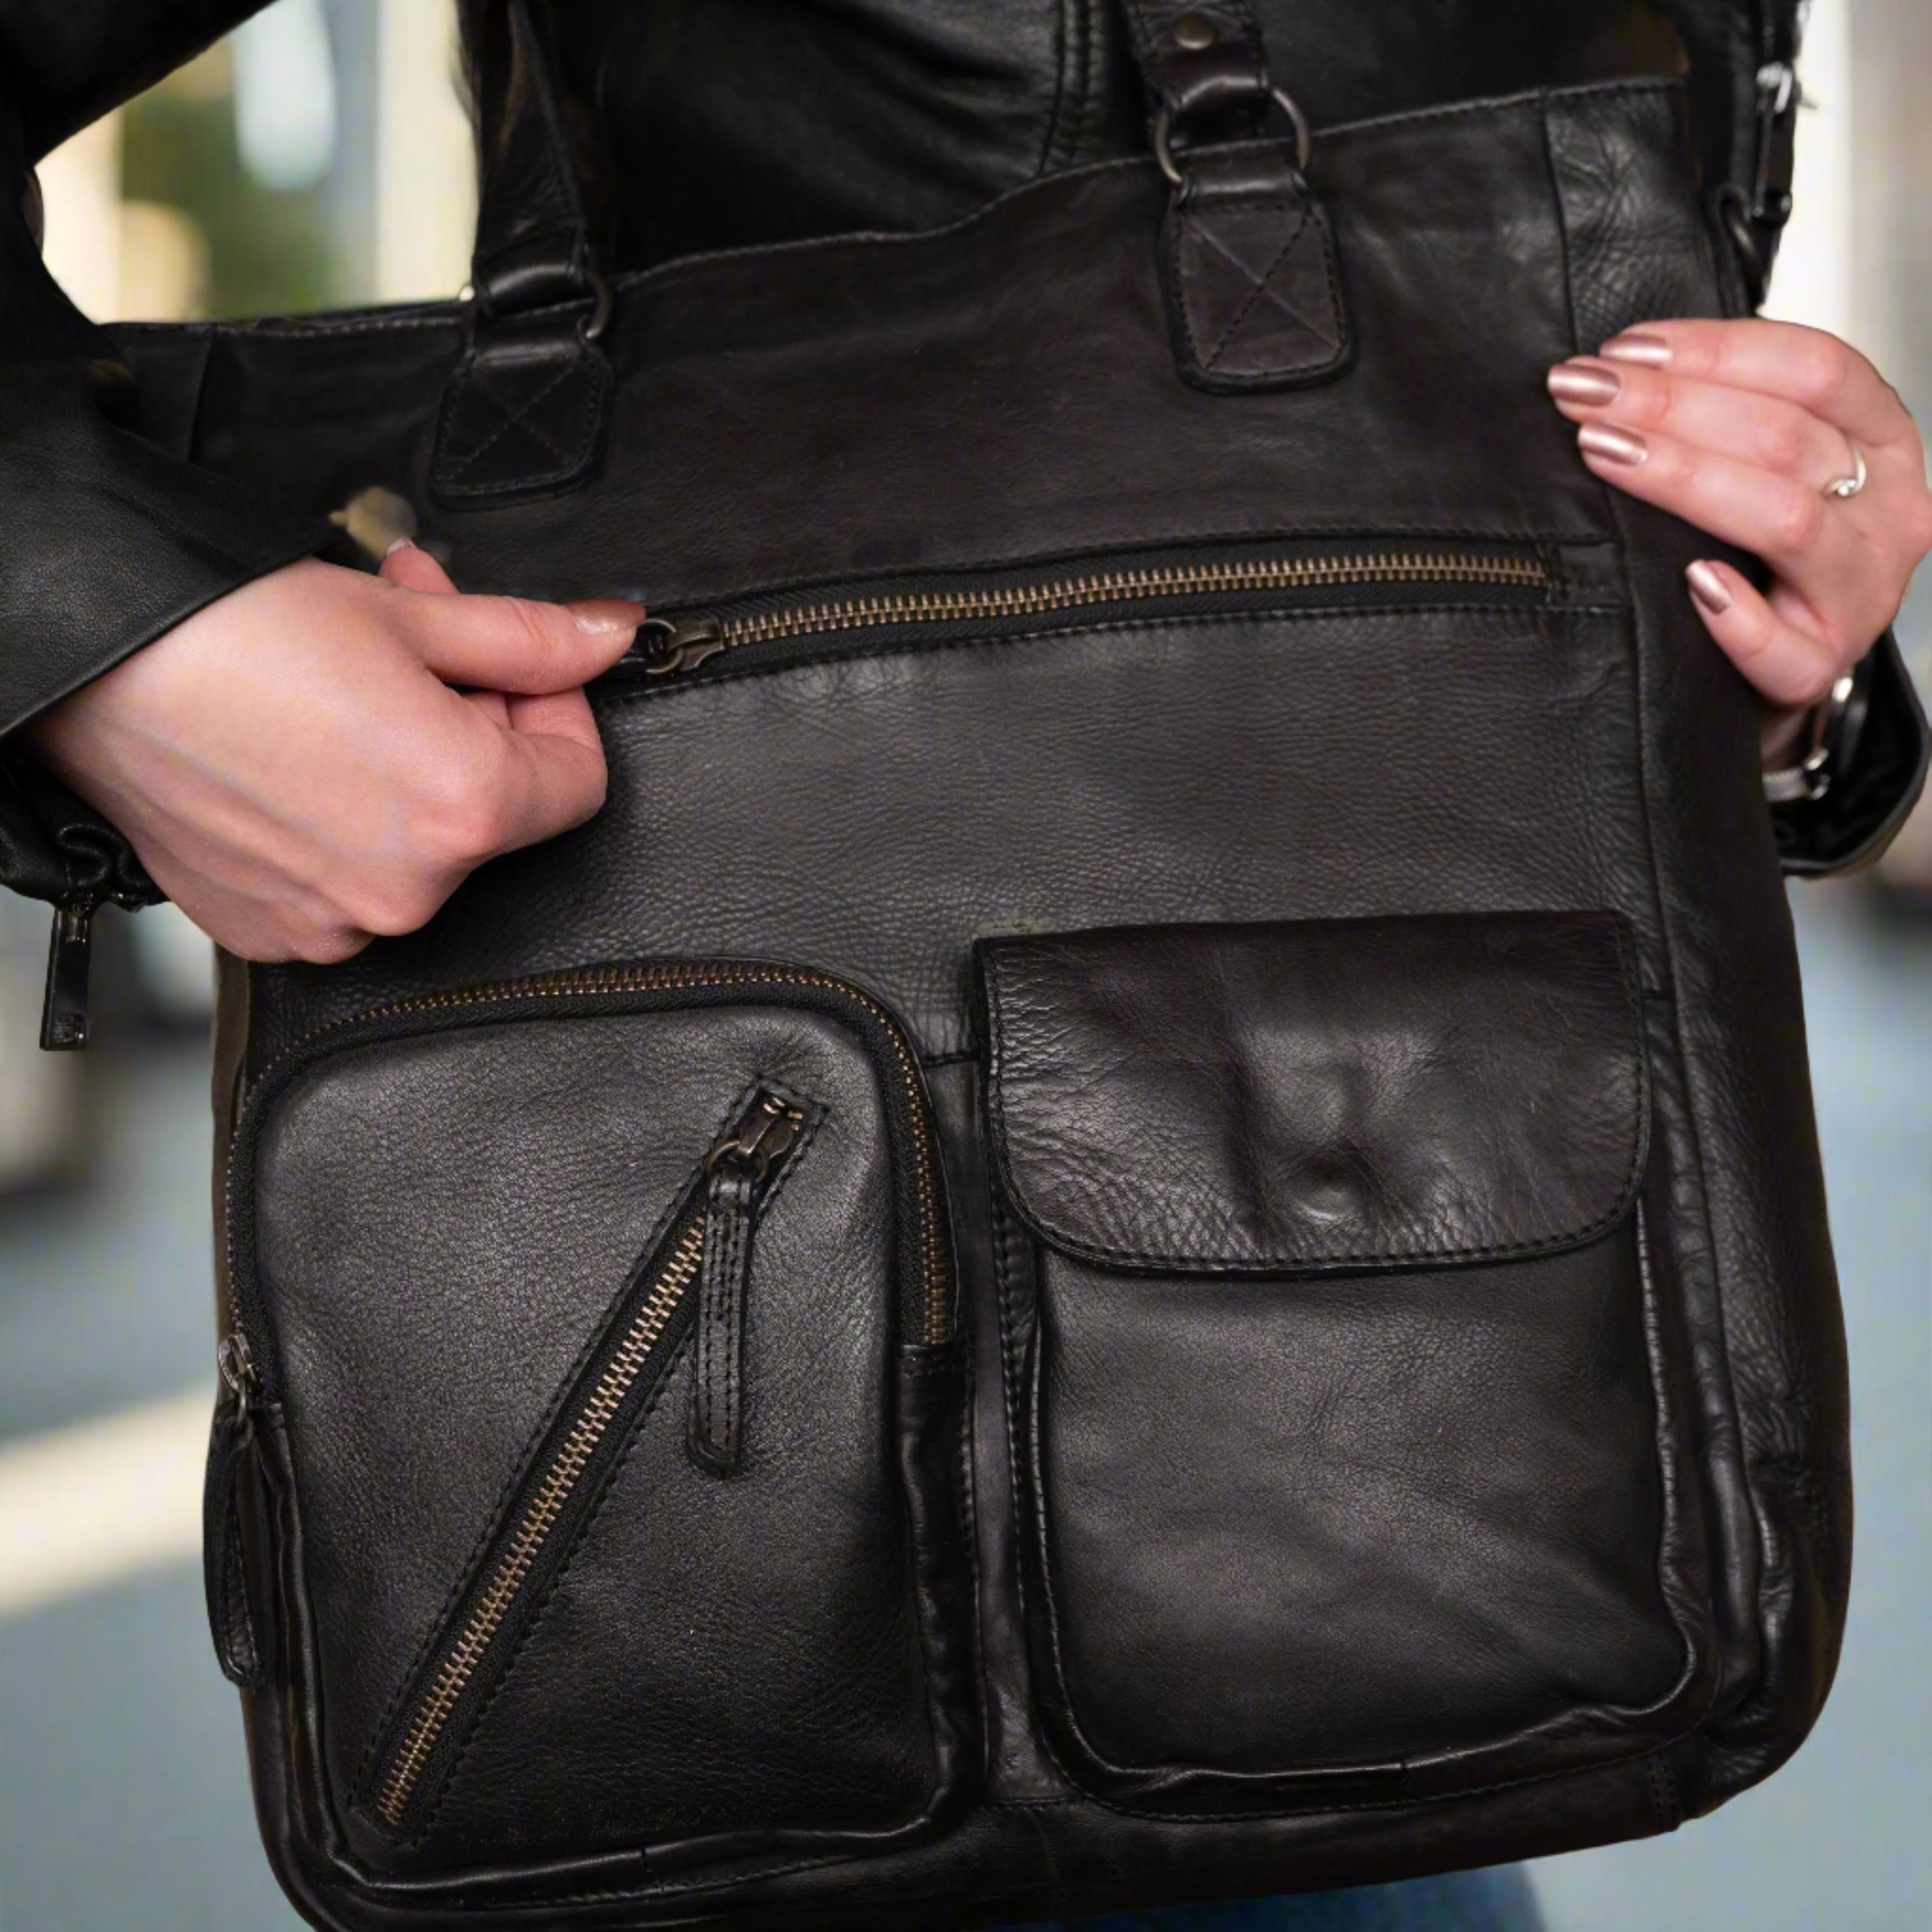 Soft Black Leather Shoulder Bag Handbags & Purses Boutique of Leathers/Open Road